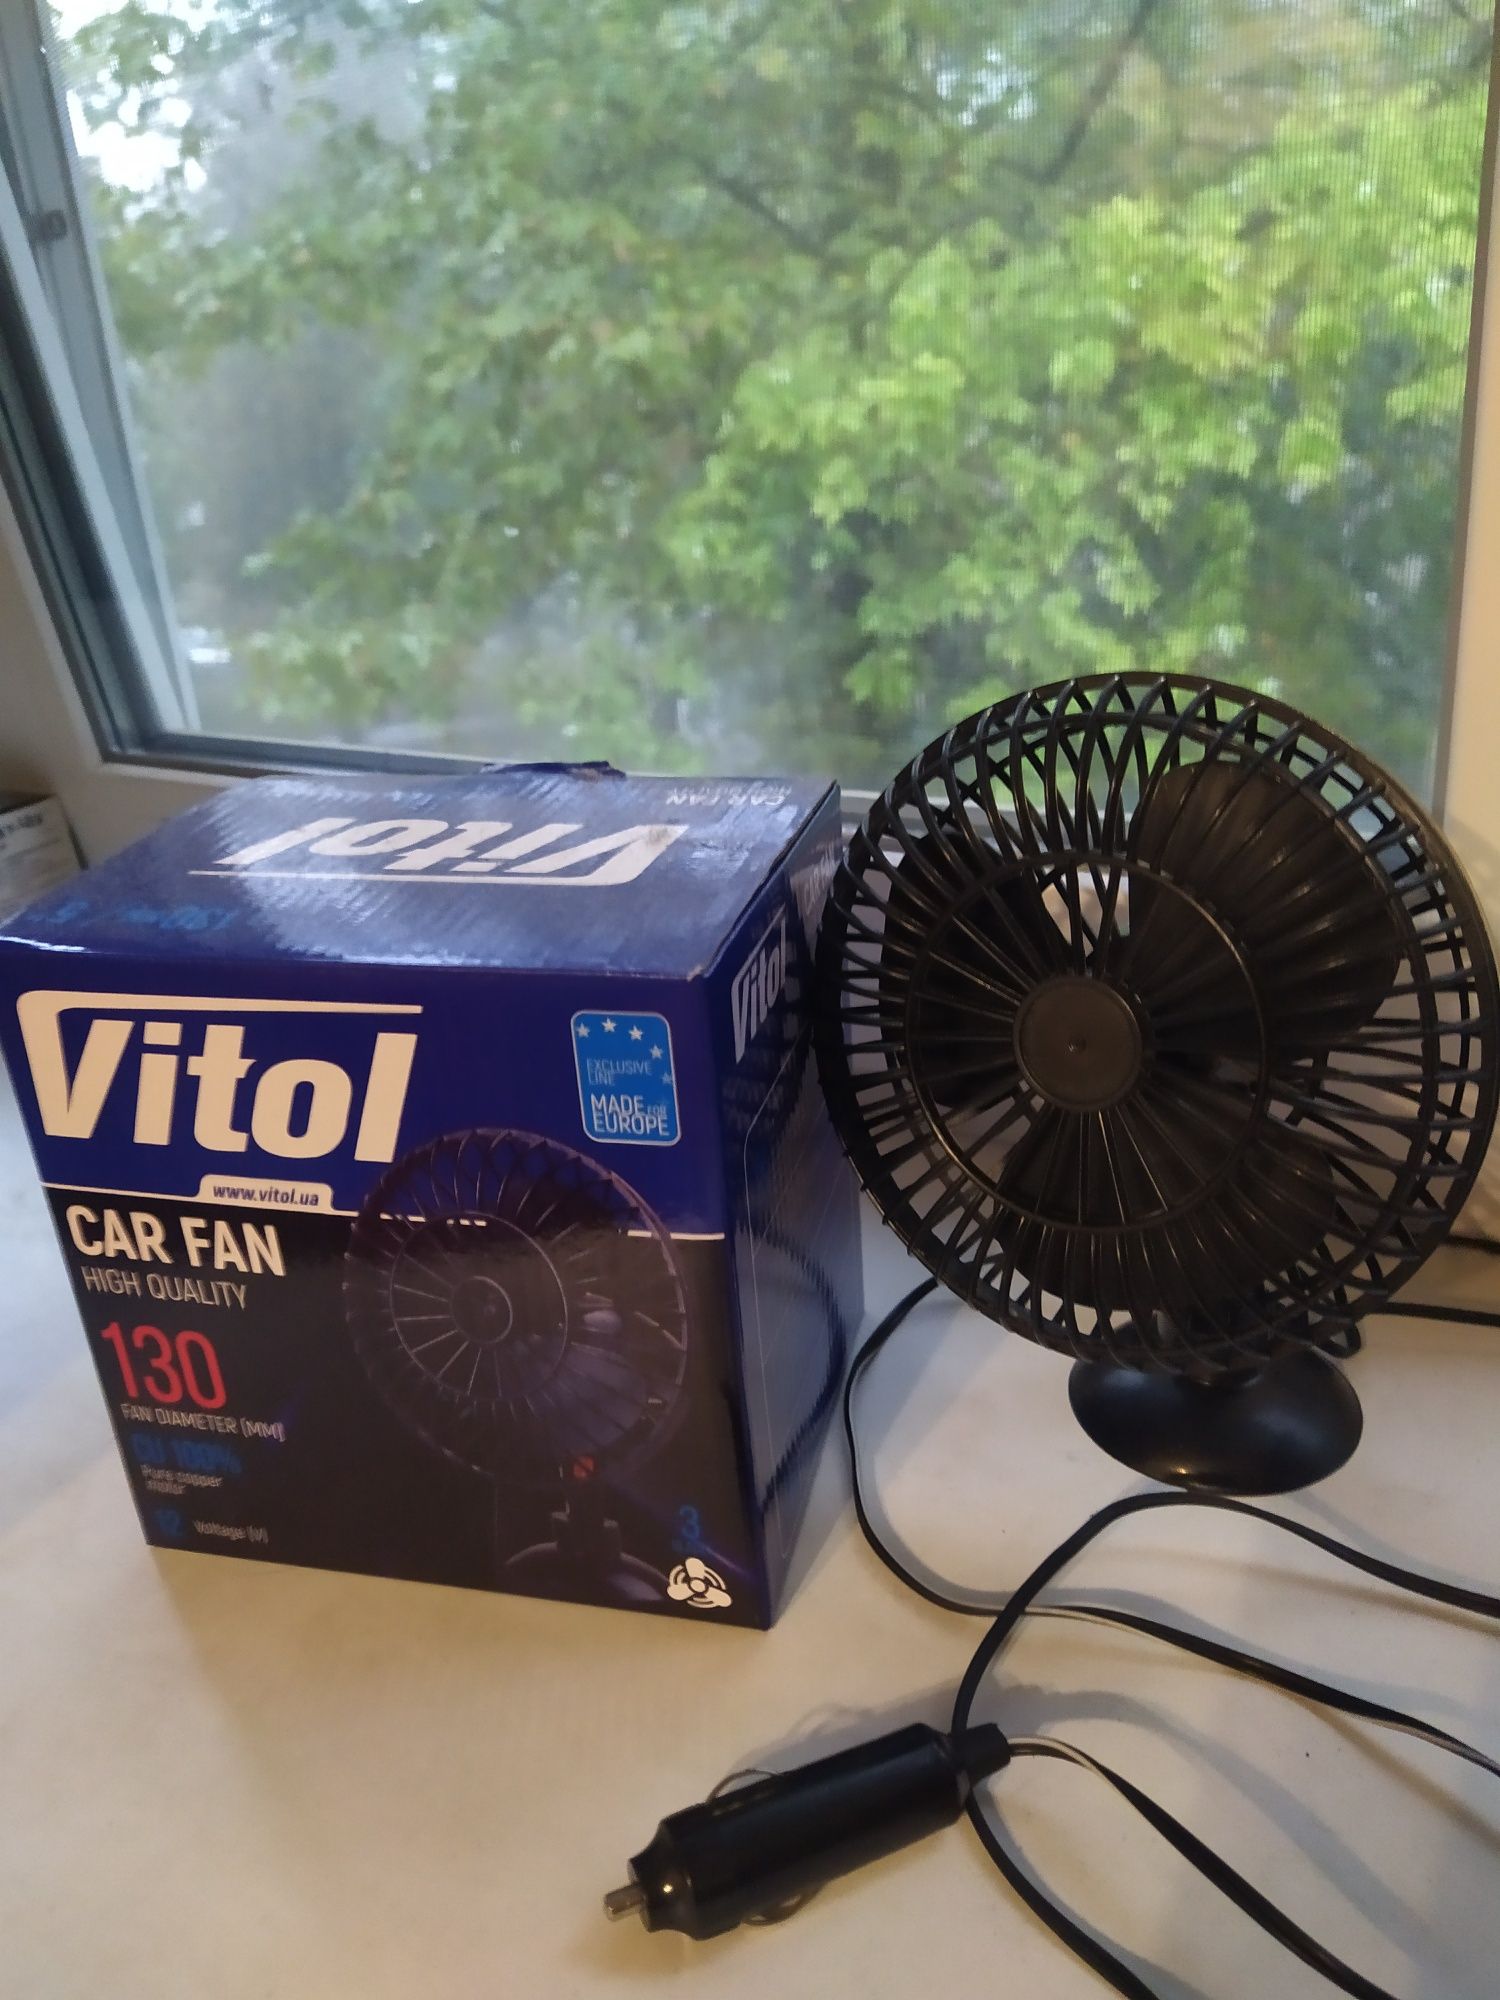 Vitol car fan вентилятор для автомобилей и яхт